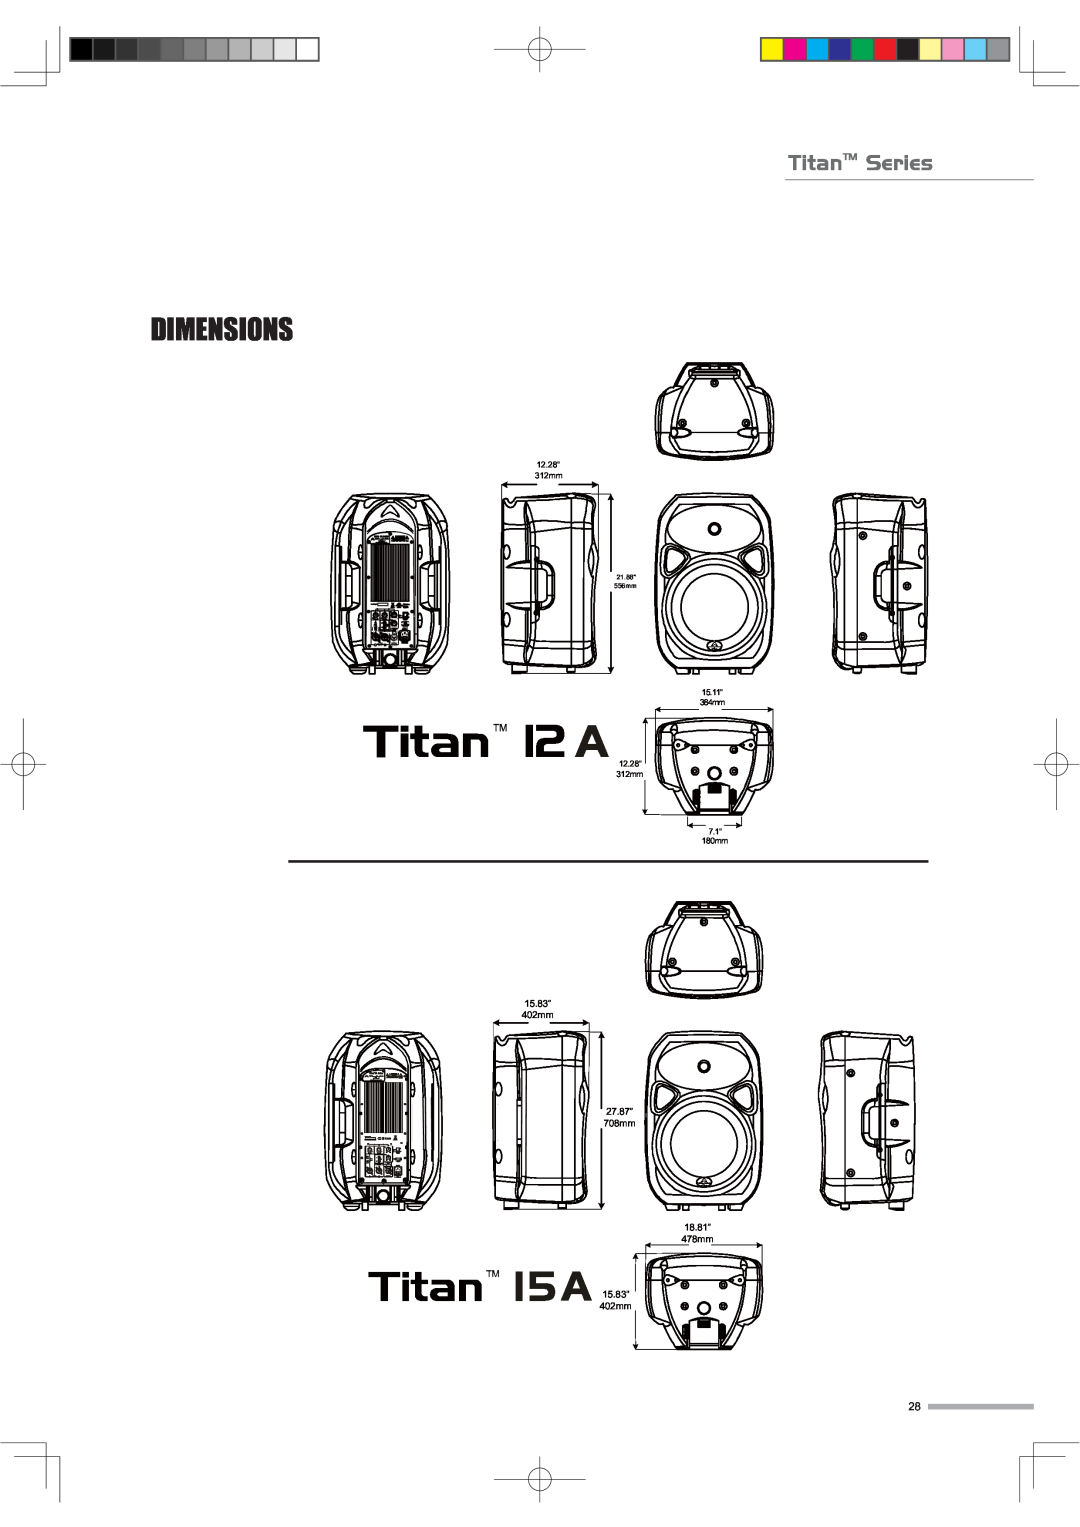 Wharfedale SUB A12 Dimensions, TitanTM Series, 15.83” 402mm 27.87” 708mm 18.81” 478mm 15.83”, 12.28 312mm, 21.88 556mm 